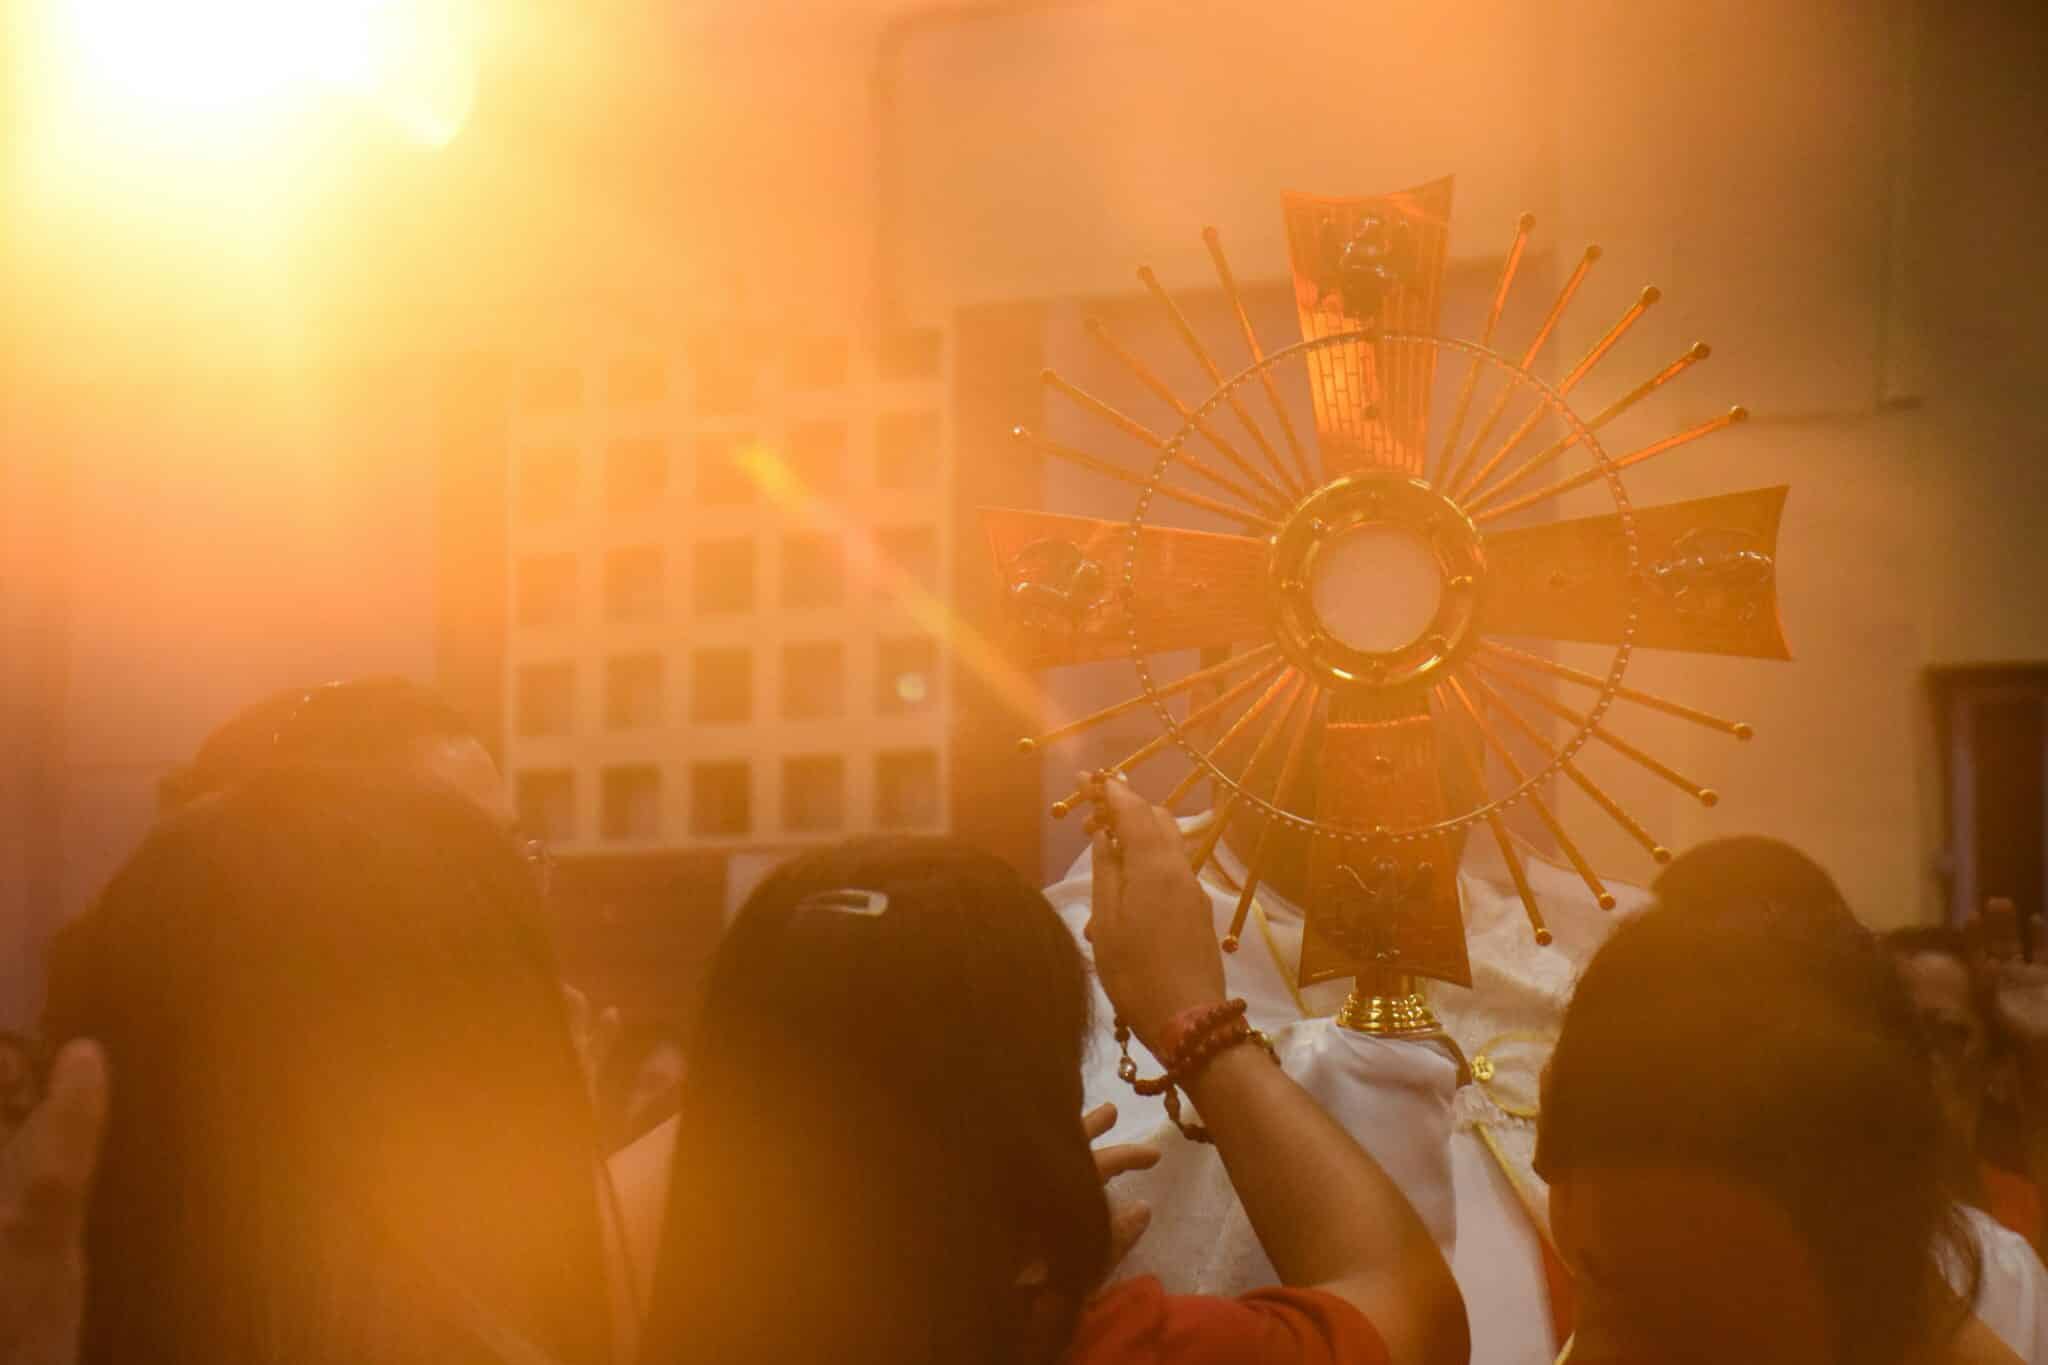 People holding the Eucharist | Photo by Erica Viana on Unsplash